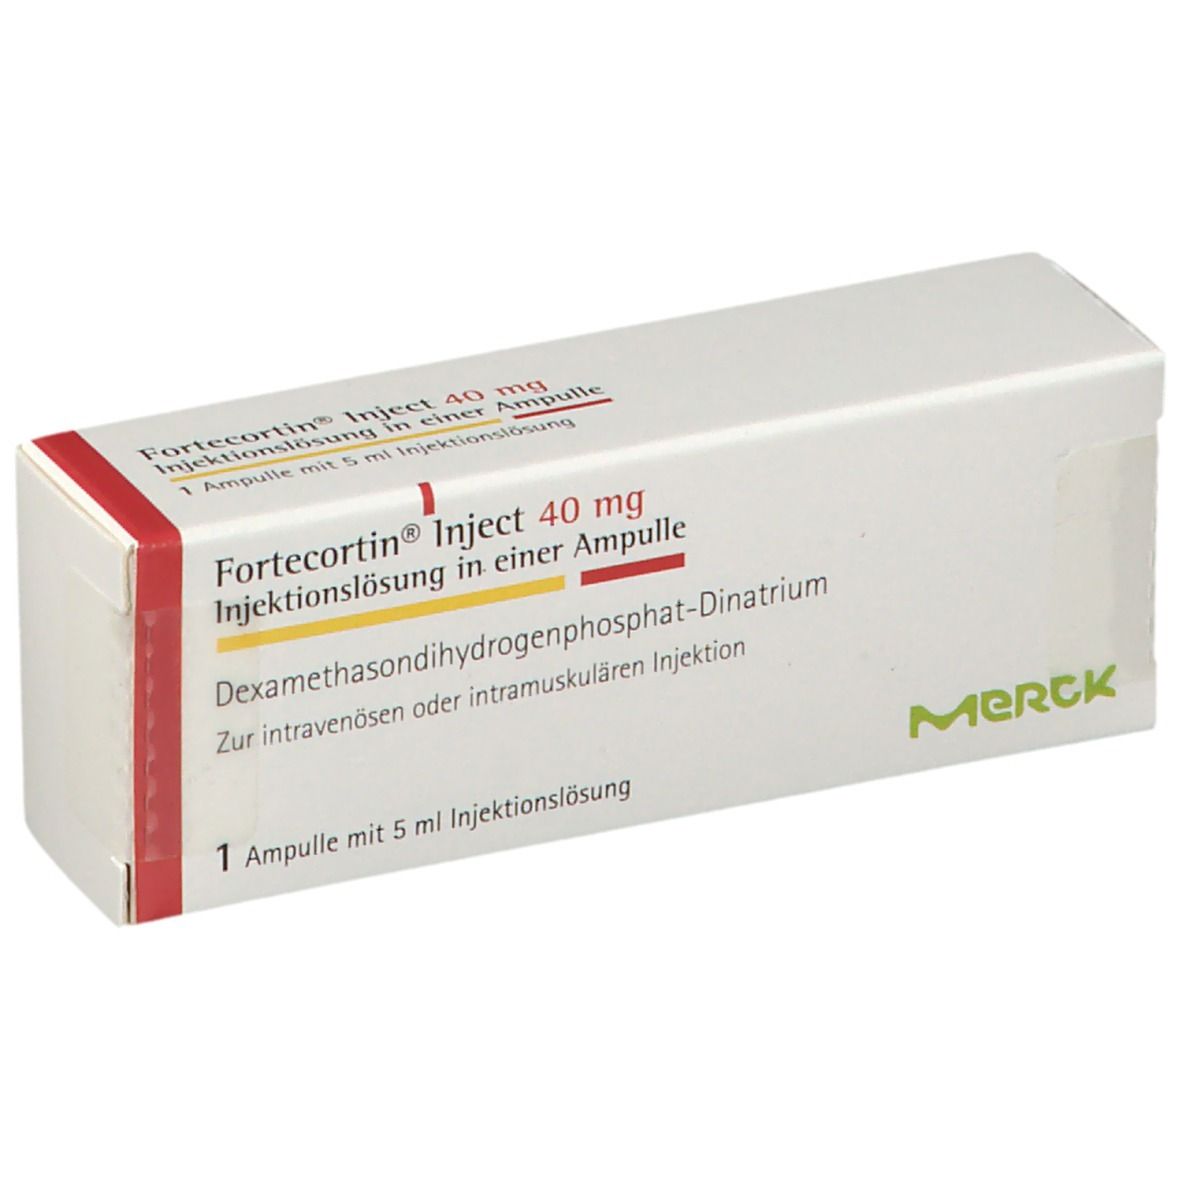 Fortecortin® Inject 40 mg